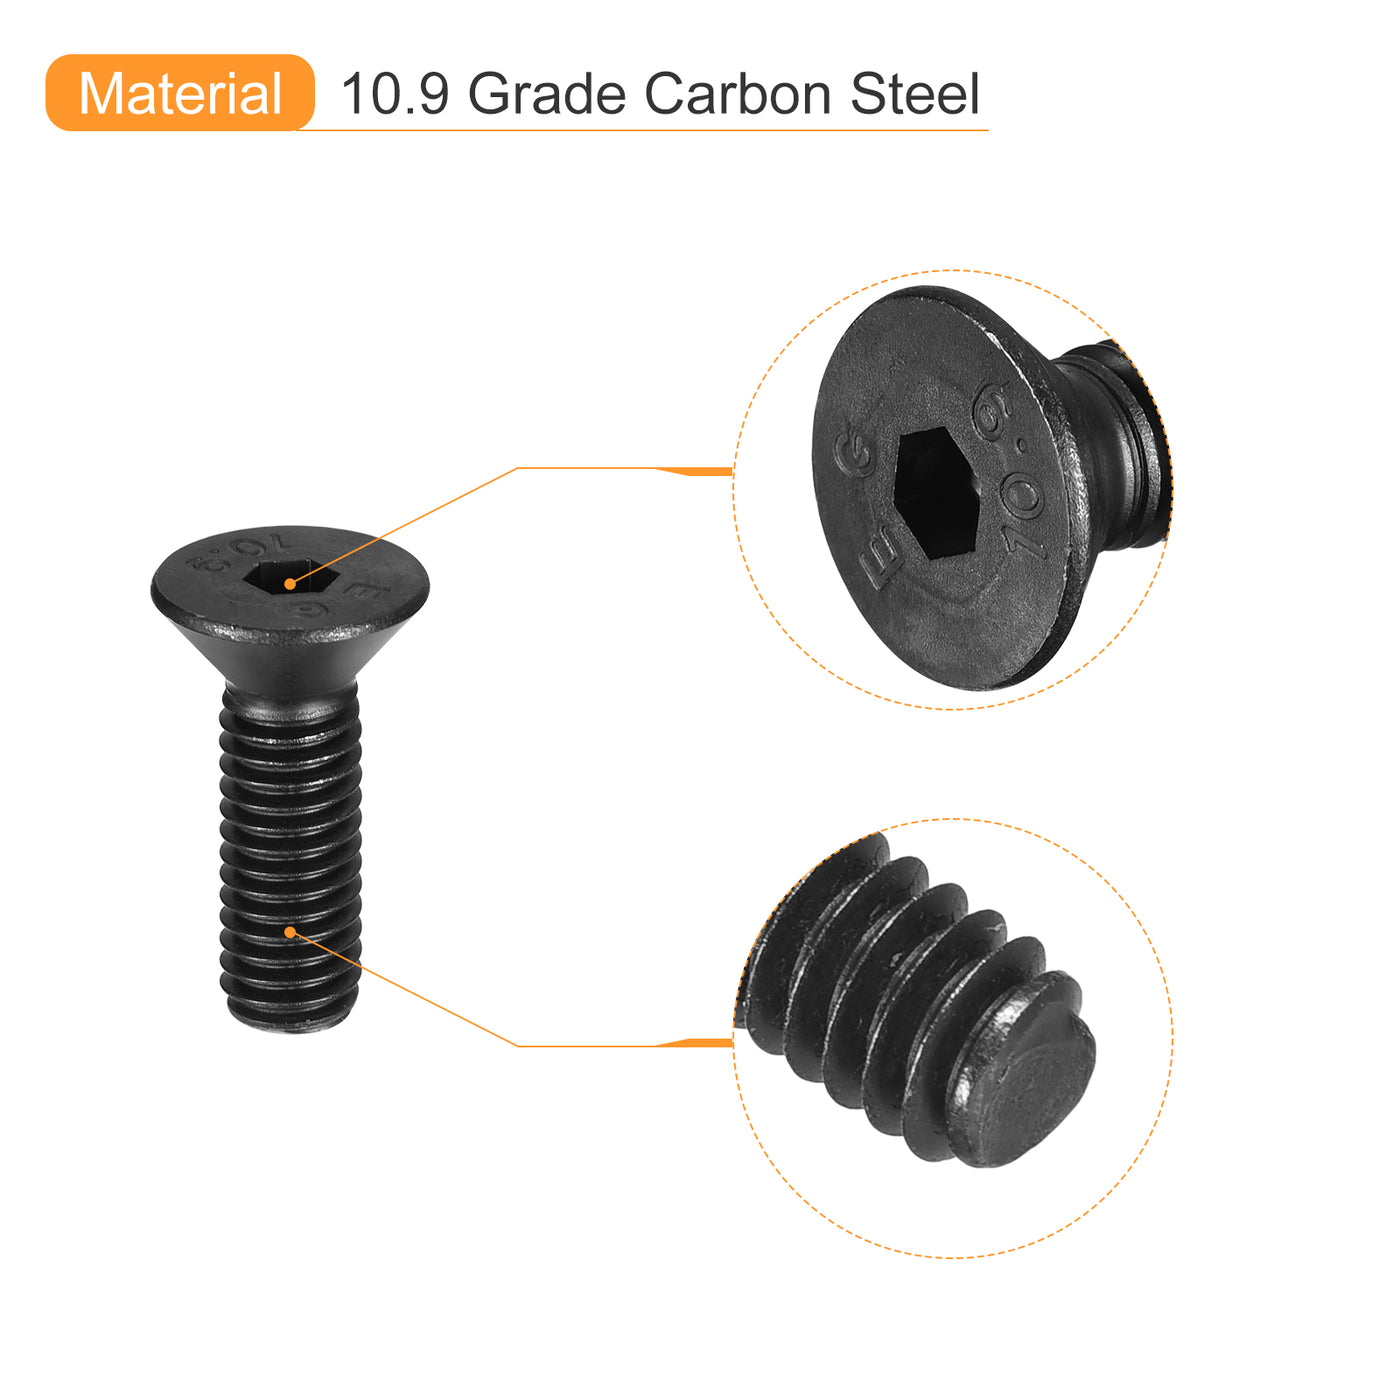 uxcell Uxcell 3/8-16x1-1/4" Flat Head Socket Cap Screws, 10.9 Grade Carbon Steel, 10PCS